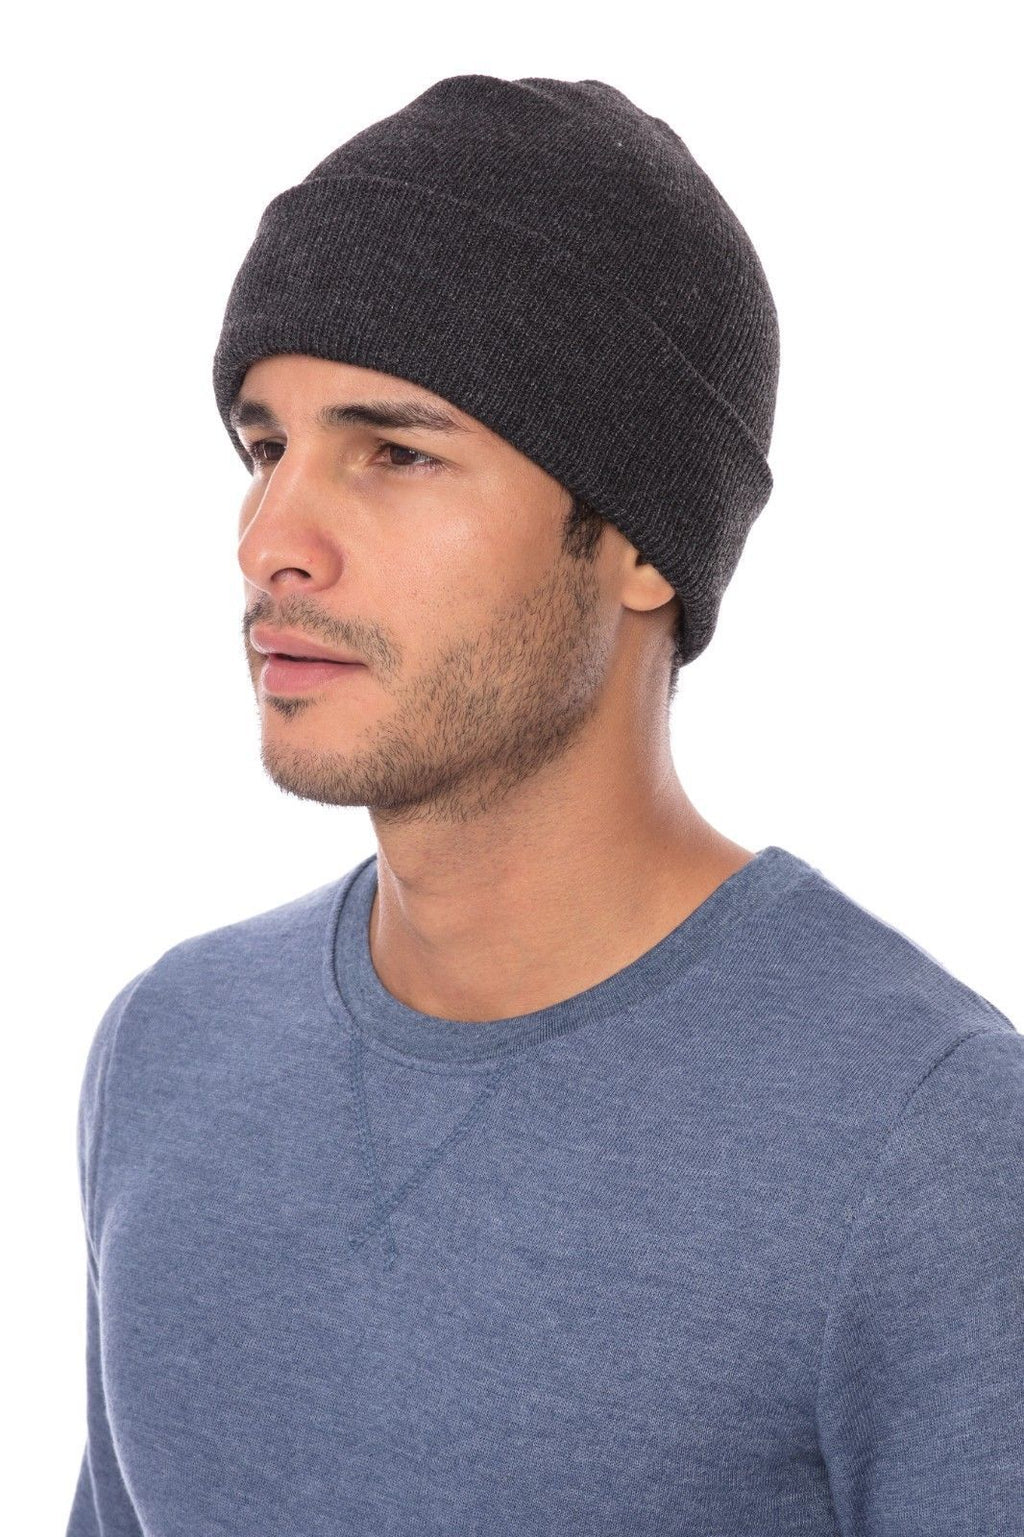 Casaba Warm Winter Beanies Hat Cap for Men Women Toboggan Cuffed Knit